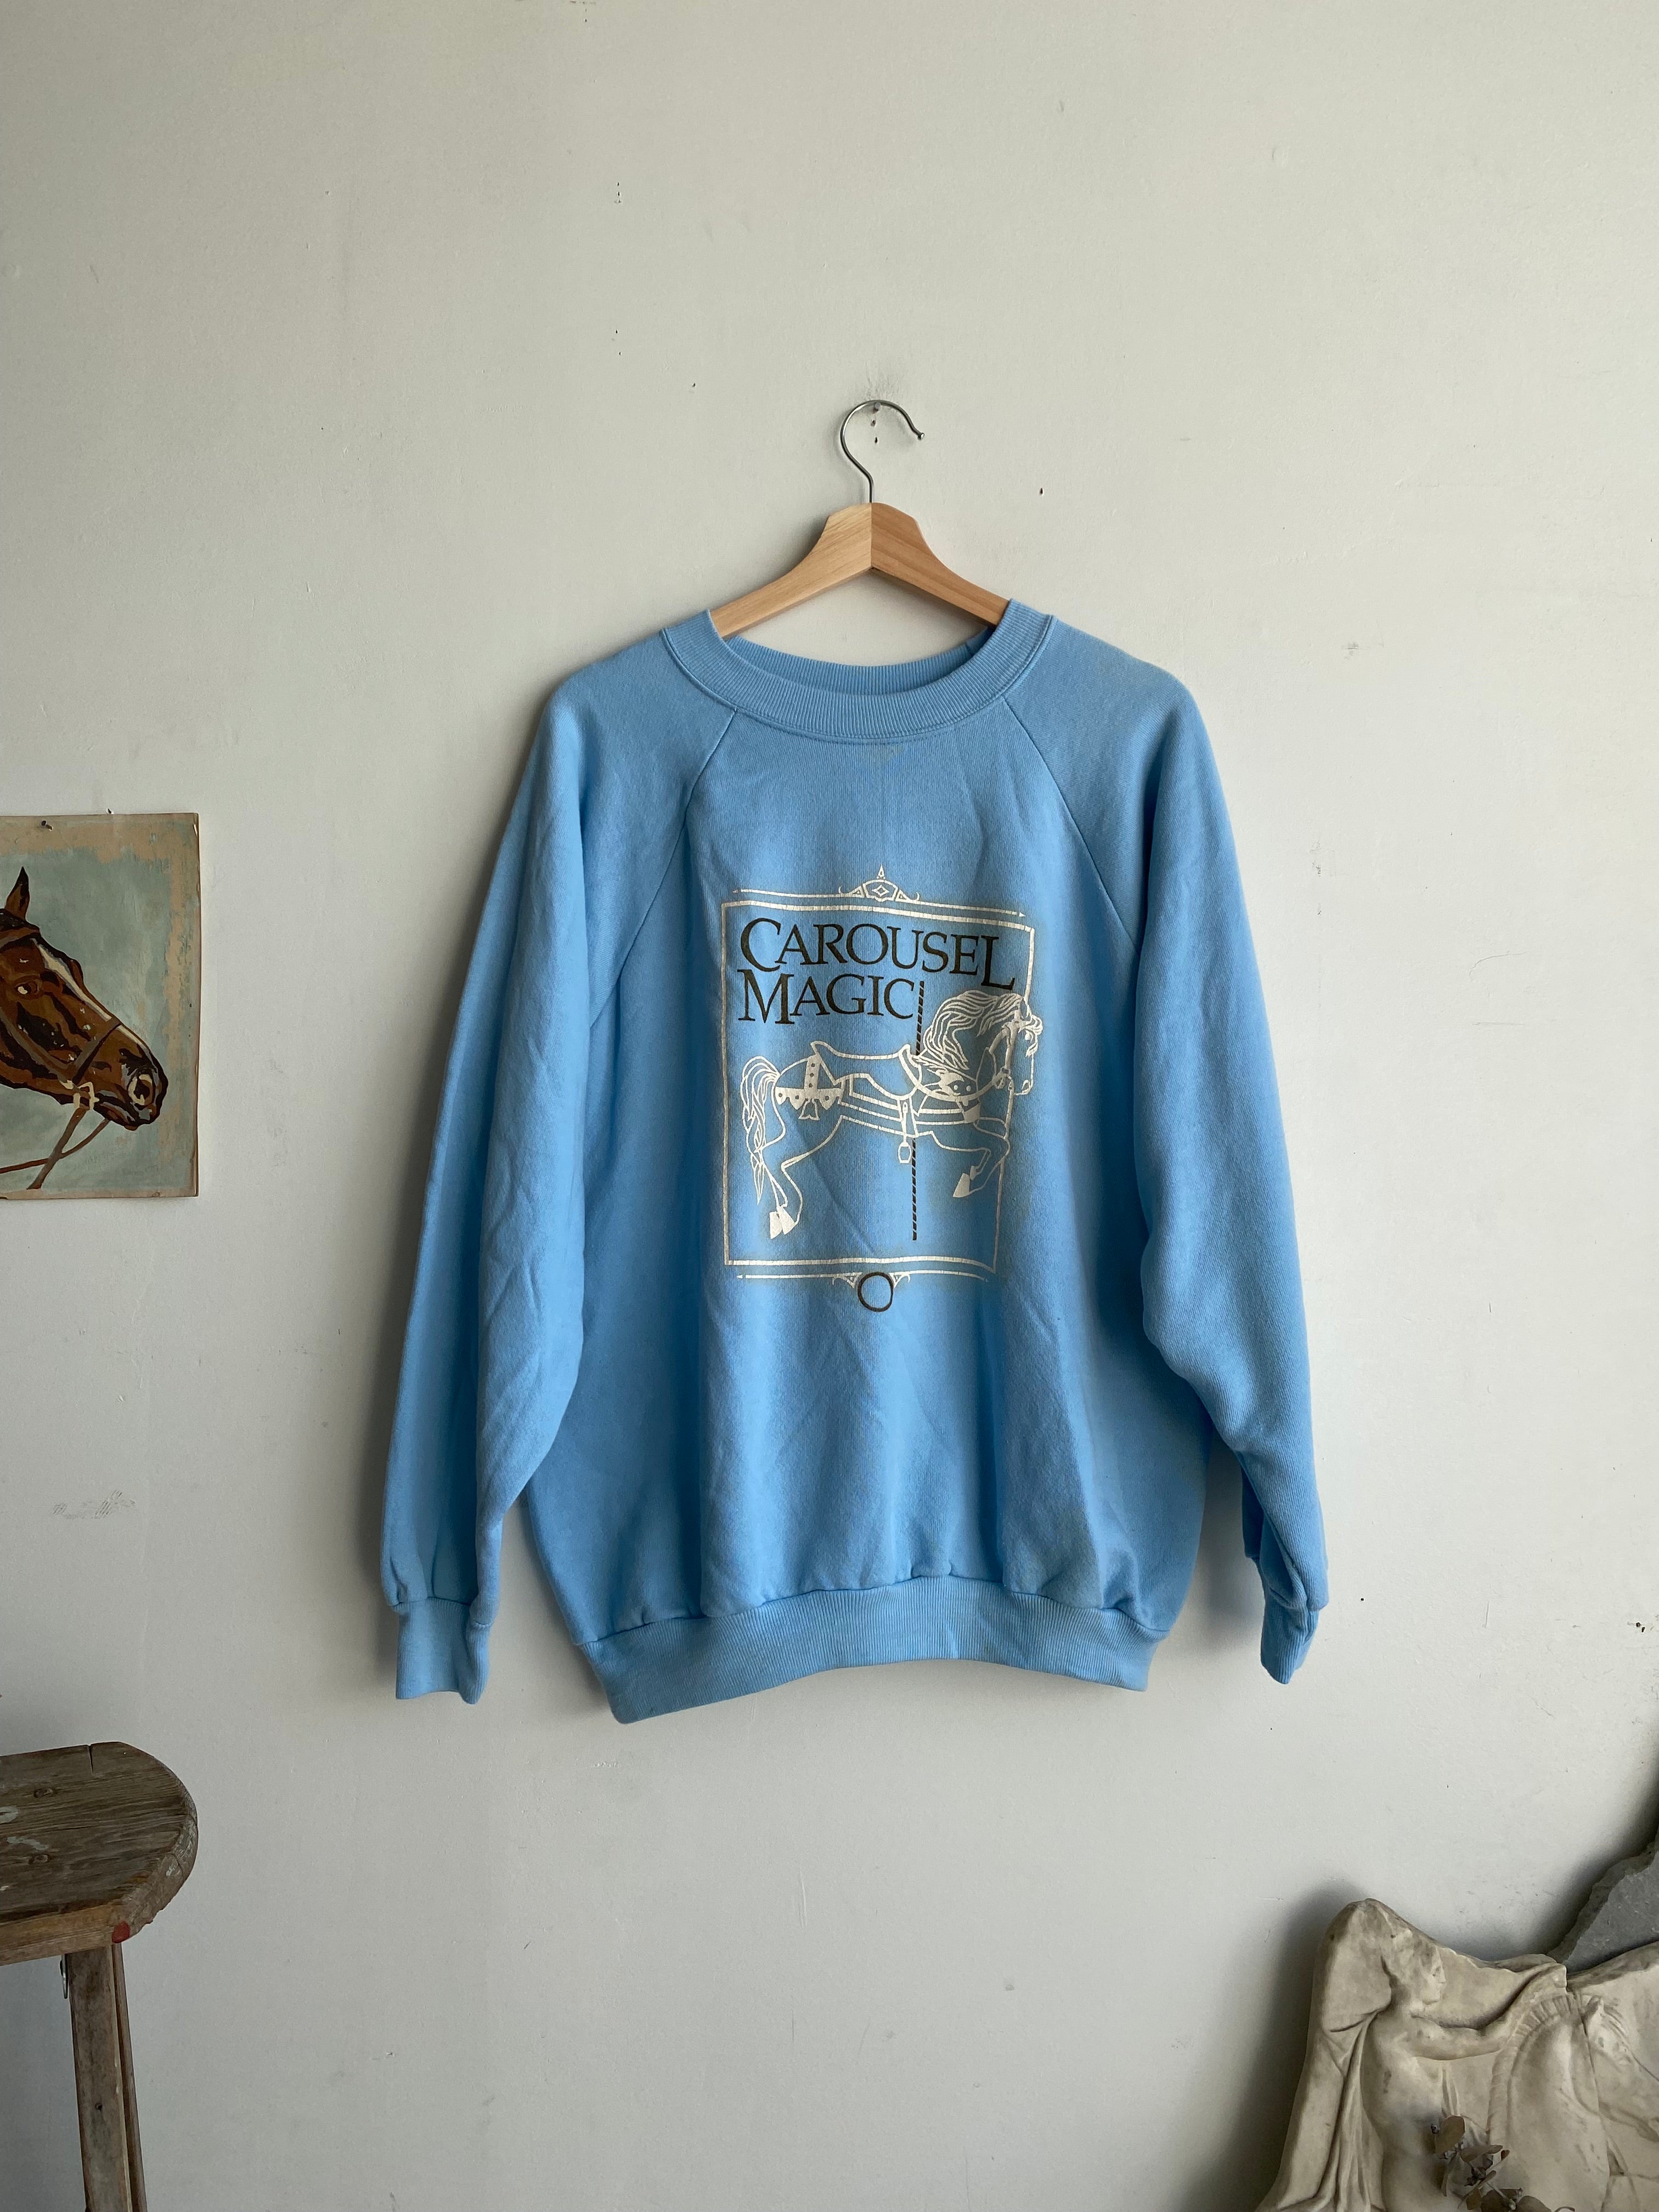 1980s Carousel Magic Sweatshirt (M/L)